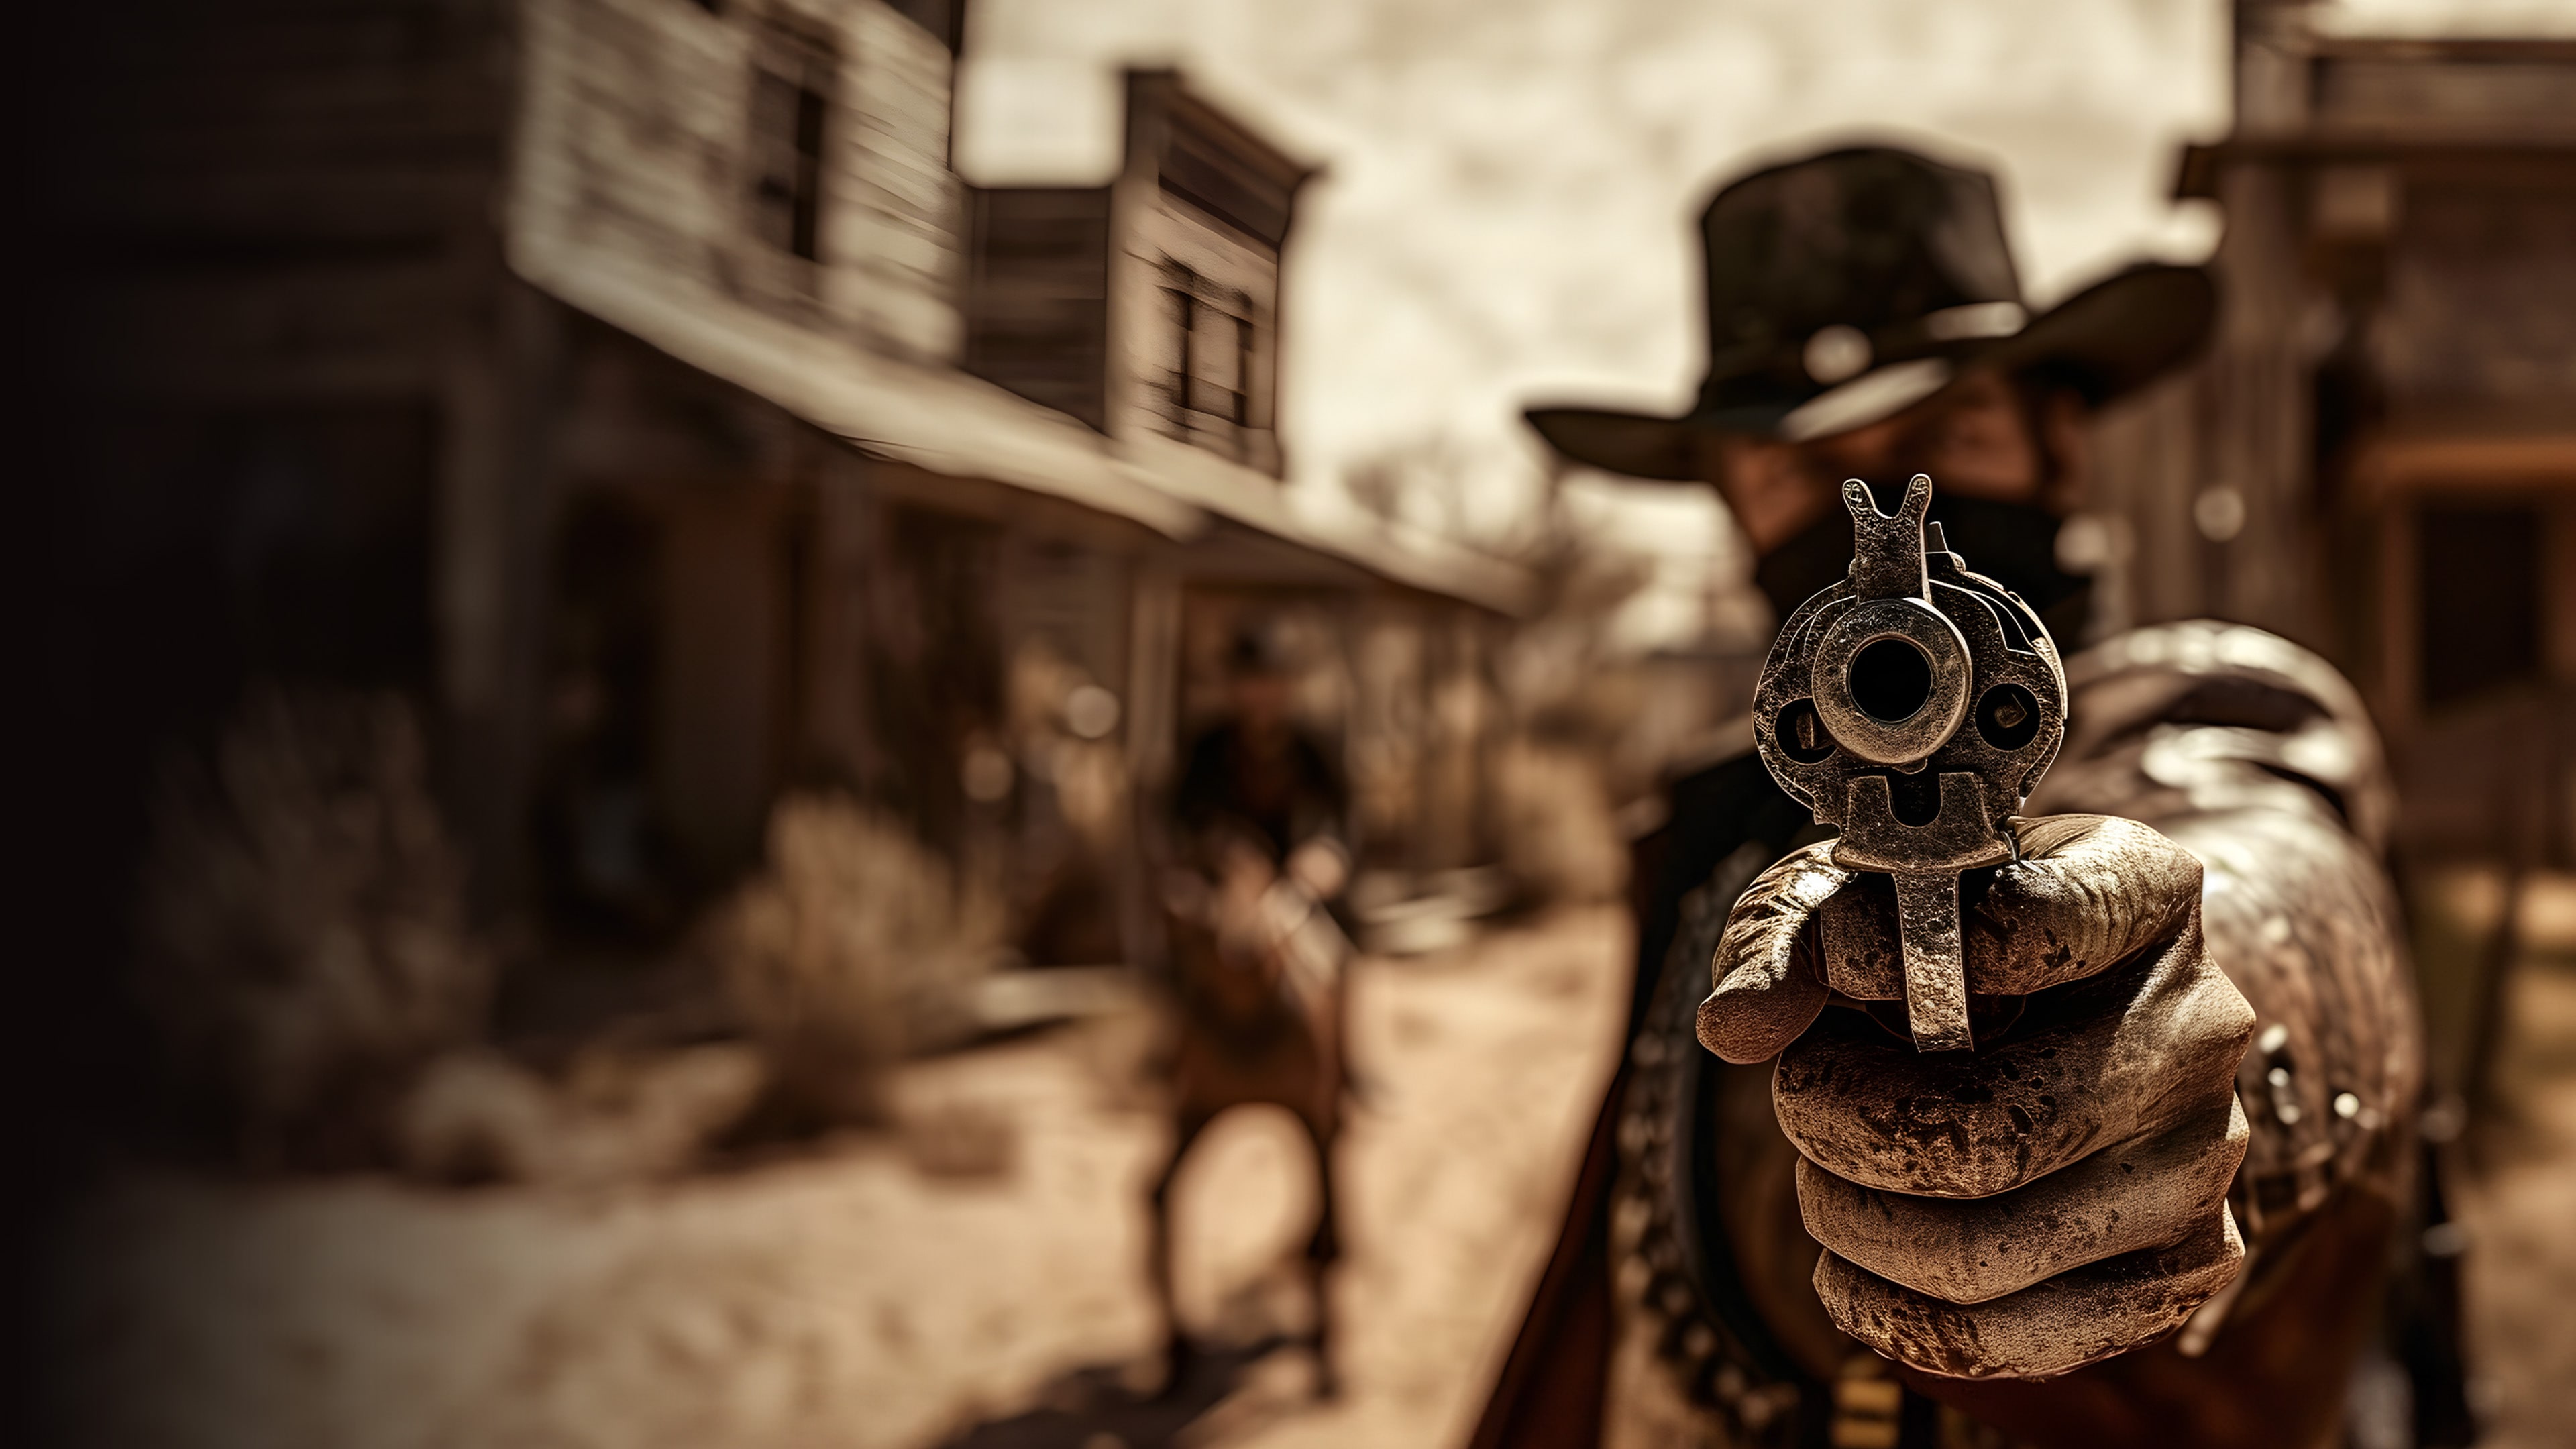 Cowboy Duel: Red Wild West Massacre